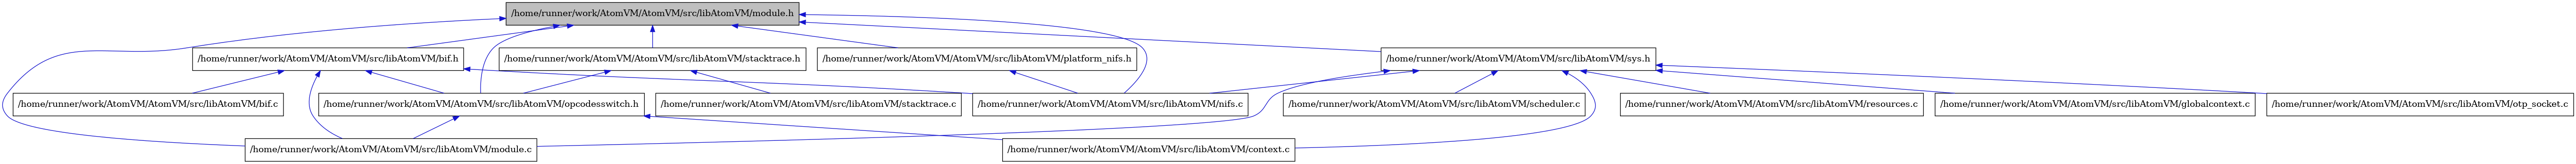 digraph {
    graph [bgcolor="#00000000"]
    node [shape=rectangle style=filled fillcolor="#FFFFFF" font=Helvetica padding=2]
    edge [color="#1414CE"]
    "3" [label="/home/runner/work/AtomVM/AtomVM/src/libAtomVM/bif.c" tooltip="/home/runner/work/AtomVM/AtomVM/src/libAtomVM/bif.c"]
    "2" [label="/home/runner/work/AtomVM/AtomVM/src/libAtomVM/bif.h" tooltip="/home/runner/work/AtomVM/AtomVM/src/libAtomVM/bif.h"]
    "8" [label="/home/runner/work/AtomVM/AtomVM/src/libAtomVM/platform_nifs.h" tooltip="/home/runner/work/AtomVM/AtomVM/src/libAtomVM/platform_nifs.h"]
    "15" [label="/home/runner/work/AtomVM/AtomVM/src/libAtomVM/scheduler.c" tooltip="/home/runner/work/AtomVM/AtomVM/src/libAtomVM/scheduler.c"]
    "7" [label="/home/runner/work/AtomVM/AtomVM/src/libAtomVM/context.c" tooltip="/home/runner/work/AtomVM/AtomVM/src/libAtomVM/context.c"]
    "10" [label="/home/runner/work/AtomVM/AtomVM/src/libAtomVM/stacktrace.c" tooltip="/home/runner/work/AtomVM/AtomVM/src/libAtomVM/stacktrace.c"]
    "9" [label="/home/runner/work/AtomVM/AtomVM/src/libAtomVM/stacktrace.h" tooltip="/home/runner/work/AtomVM/AtomVM/src/libAtomVM/stacktrace.h"]
    "4" [label="/home/runner/work/AtomVM/AtomVM/src/libAtomVM/module.c" tooltip="/home/runner/work/AtomVM/AtomVM/src/libAtomVM/module.c"]
    "1" [label="/home/runner/work/AtomVM/AtomVM/src/libAtomVM/module.h" tooltip="/home/runner/work/AtomVM/AtomVM/src/libAtomVM/module.h" fillcolor="#BFBFBF"]
    "14" [label="/home/runner/work/AtomVM/AtomVM/src/libAtomVM/resources.c" tooltip="/home/runner/work/AtomVM/AtomVM/src/libAtomVM/resources.c"]
    "11" [label="/home/runner/work/AtomVM/AtomVM/src/libAtomVM/sys.h" tooltip="/home/runner/work/AtomVM/AtomVM/src/libAtomVM/sys.h"]
    "5" [label="/home/runner/work/AtomVM/AtomVM/src/libAtomVM/nifs.c" tooltip="/home/runner/work/AtomVM/AtomVM/src/libAtomVM/nifs.c"]
    "6" [label="/home/runner/work/AtomVM/AtomVM/src/libAtomVM/opcodesswitch.h" tooltip="/home/runner/work/AtomVM/AtomVM/src/libAtomVM/opcodesswitch.h"]
    "12" [label="/home/runner/work/AtomVM/AtomVM/src/libAtomVM/globalcontext.c" tooltip="/home/runner/work/AtomVM/AtomVM/src/libAtomVM/globalcontext.c"]
    "13" [label="/home/runner/work/AtomVM/AtomVM/src/libAtomVM/otp_socket.c" tooltip="/home/runner/work/AtomVM/AtomVM/src/libAtomVM/otp_socket.c"]
    "2" -> "3" [dir=back tooltip="include"]
    "2" -> "4" [dir=back tooltip="include"]
    "2" -> "5" [dir=back tooltip="include"]
    "2" -> "6" [dir=back tooltip="include"]
    "8" -> "5" [dir=back tooltip="include"]
    "9" -> "6" [dir=back tooltip="include"]
    "9" -> "10" [dir=back tooltip="include"]
    "1" -> "2" [dir=back tooltip="include"]
    "1" -> "4" [dir=back tooltip="include"]
    "1" -> "5" [dir=back tooltip="include"]
    "1" -> "6" [dir=back tooltip="include"]
    "1" -> "8" [dir=back tooltip="include"]
    "1" -> "9" [dir=back tooltip="include"]
    "1" -> "11" [dir=back tooltip="include"]
    "11" -> "7" [dir=back tooltip="include"]
    "11" -> "12" [dir=back tooltip="include"]
    "11" -> "4" [dir=back tooltip="include"]
    "11" -> "5" [dir=back tooltip="include"]
    "11" -> "13" [dir=back tooltip="include"]
    "11" -> "14" [dir=back tooltip="include"]
    "11" -> "15" [dir=back tooltip="include"]
    "6" -> "7" [dir=back tooltip="include"]
    "6" -> "4" [dir=back tooltip="include"]
}